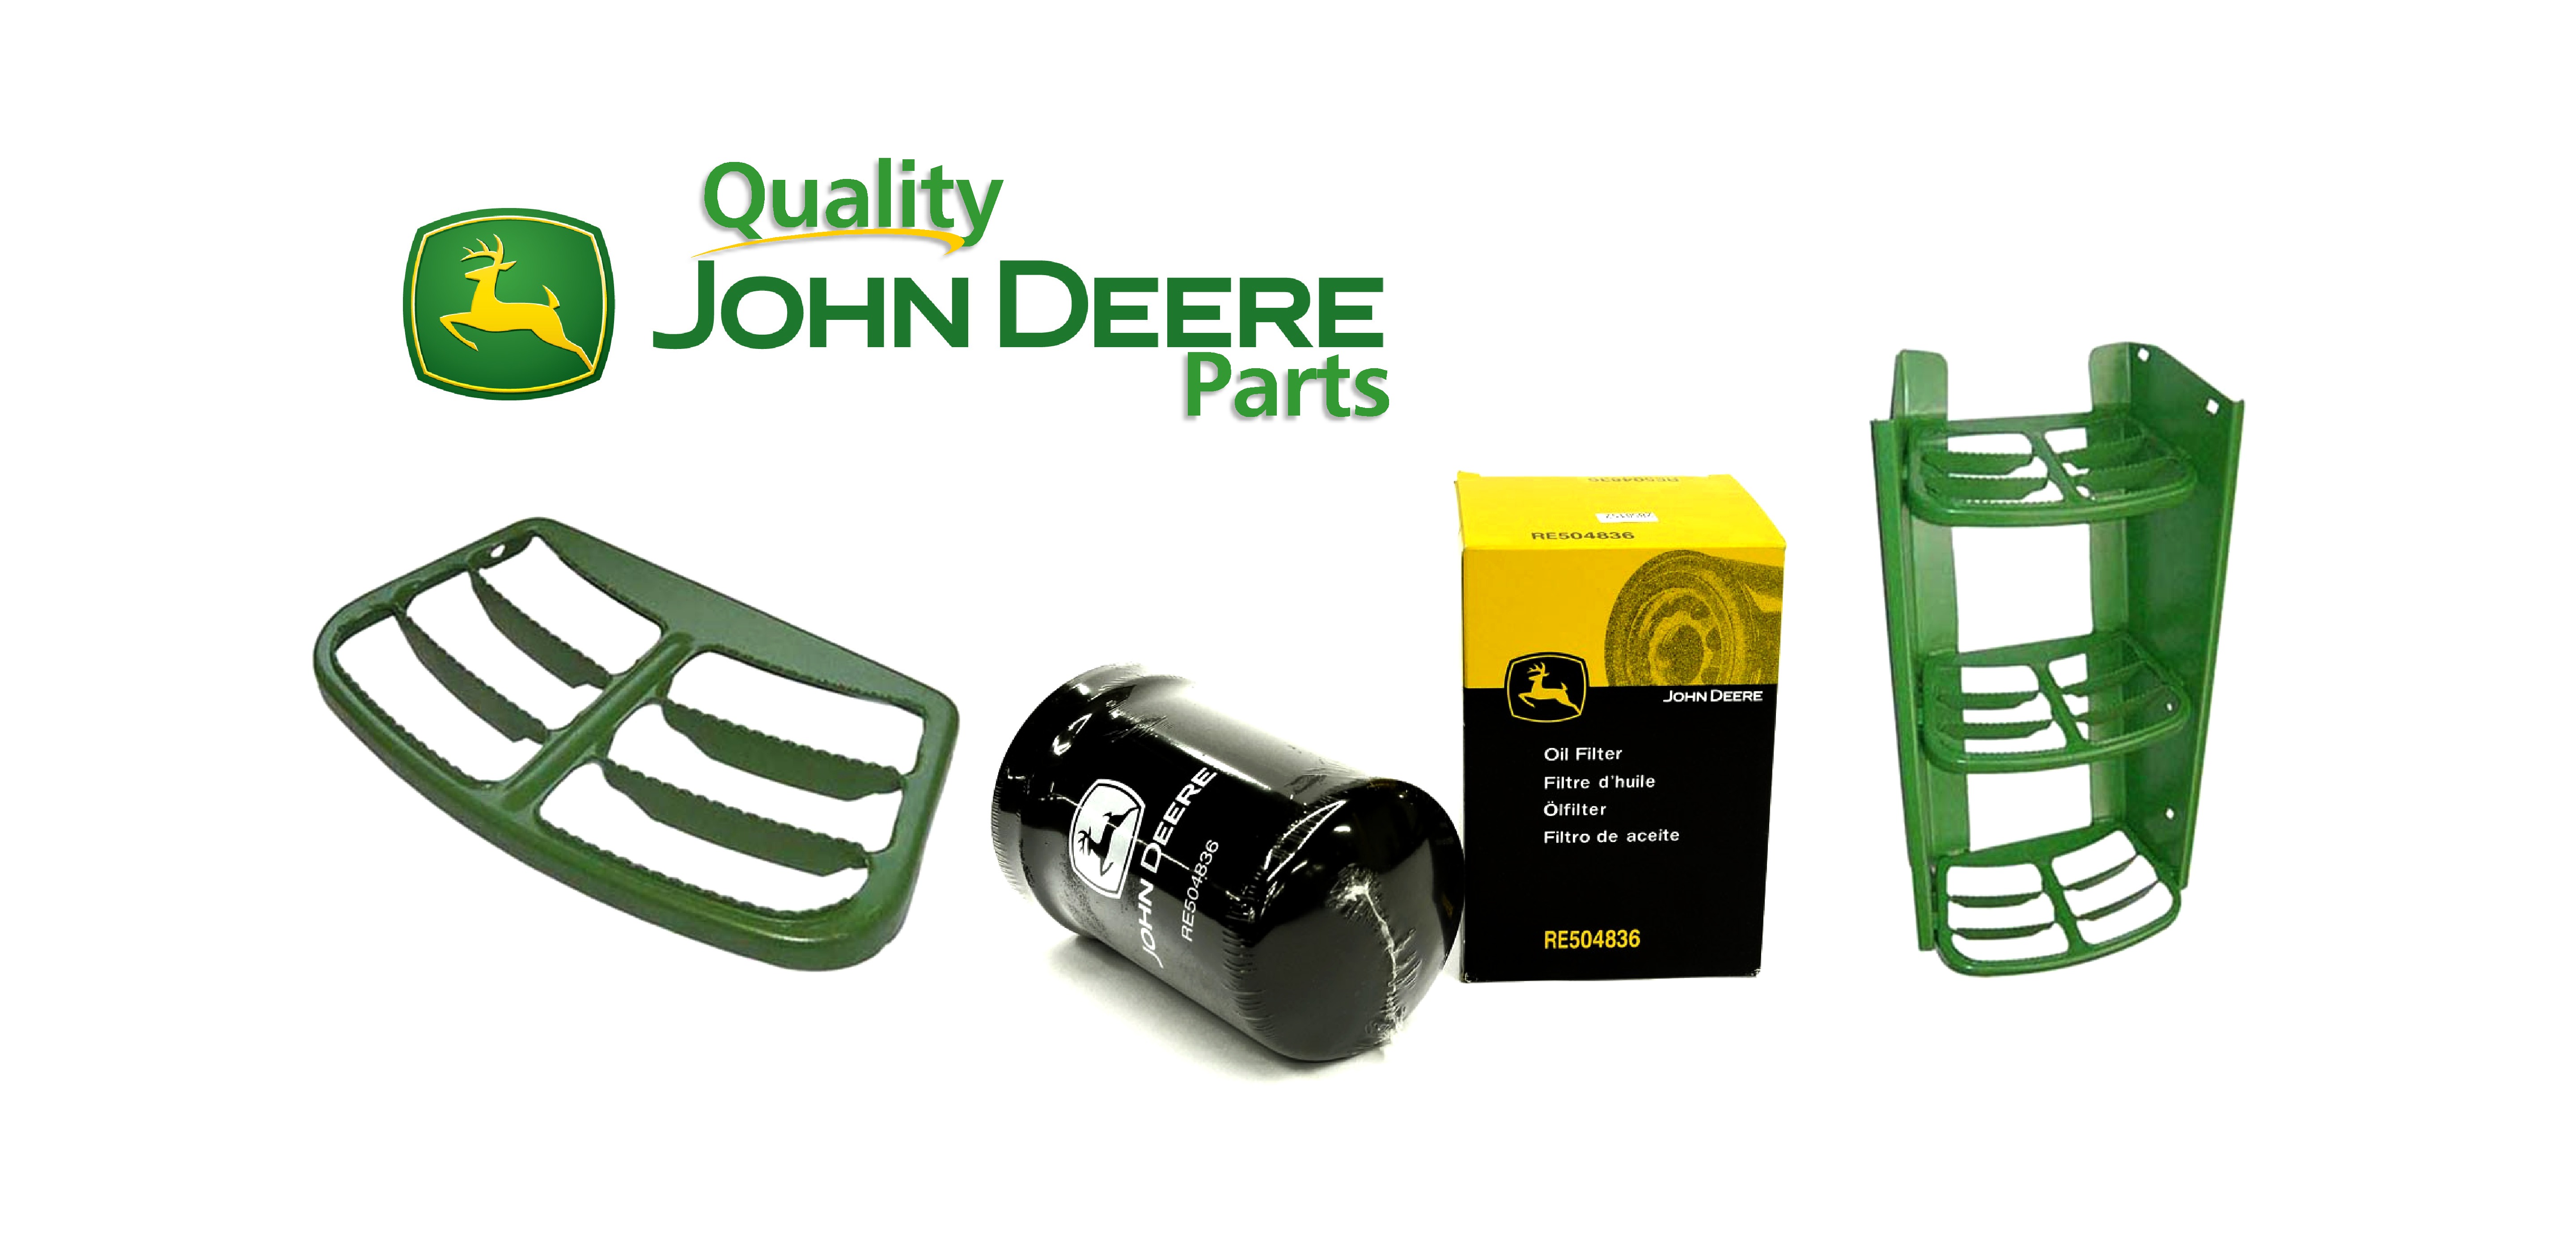 John Deere Tractor Parts - J&J Services